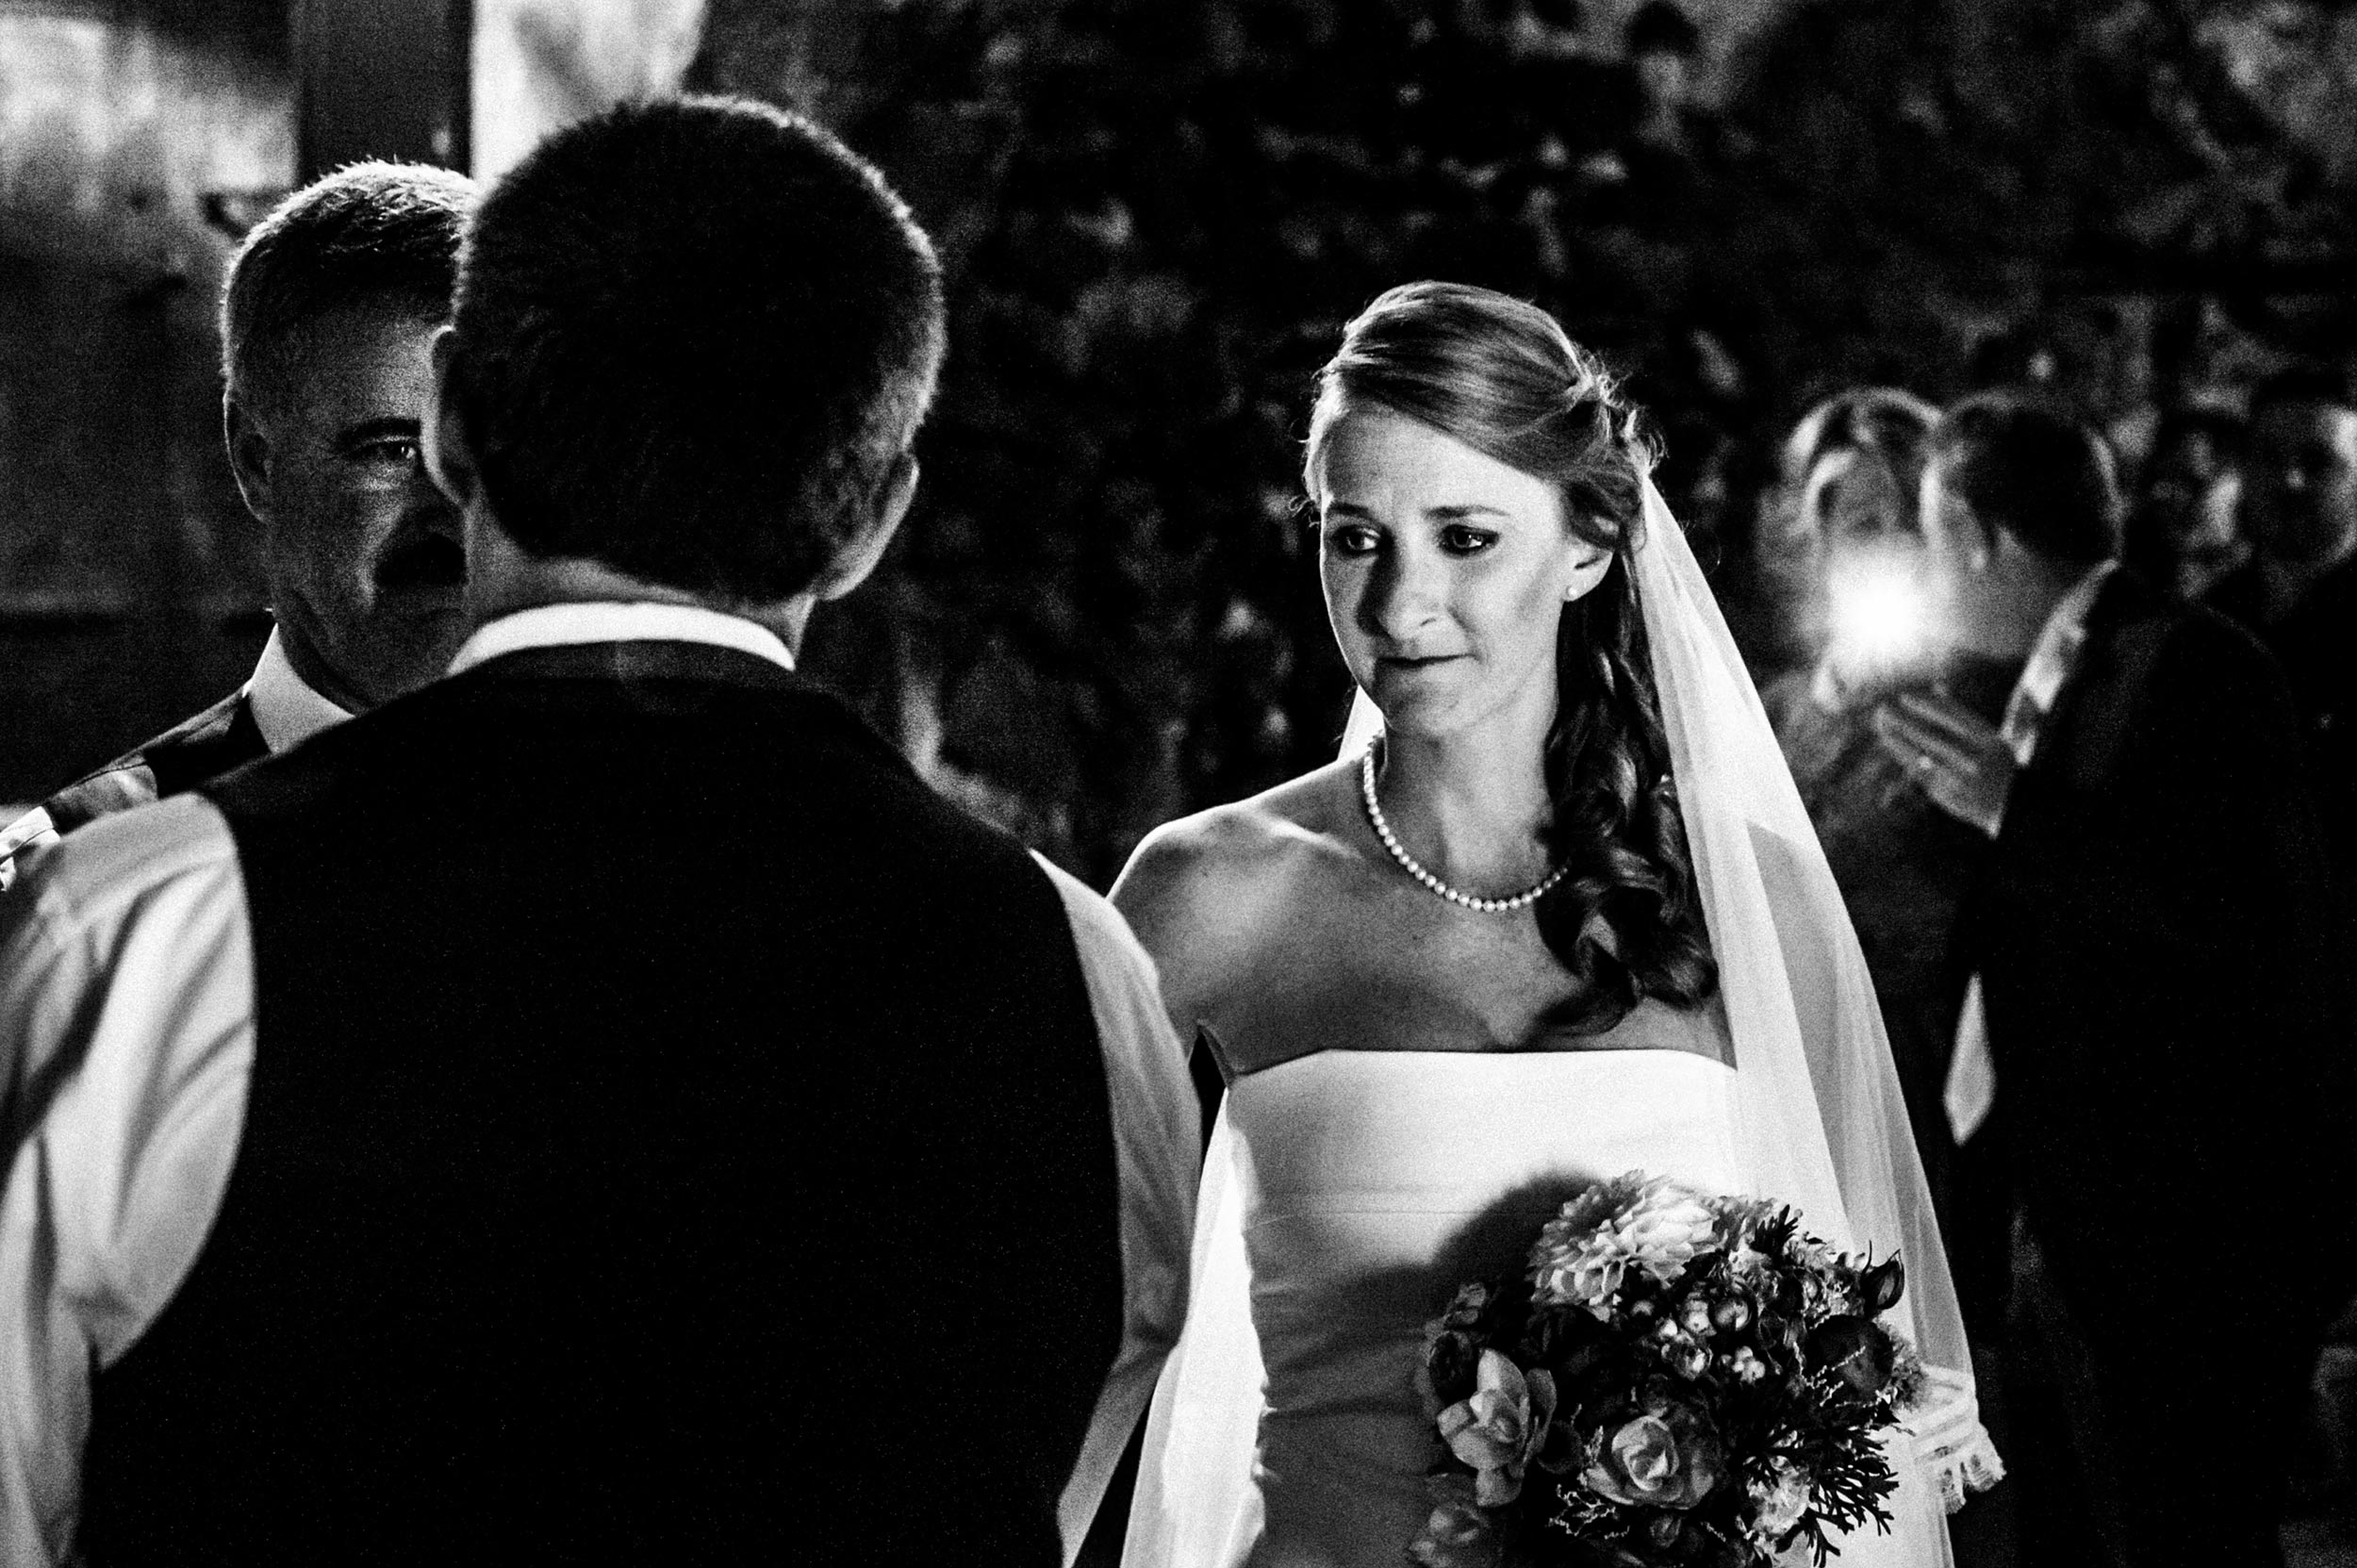 2014-Shelby-Jocelyn-Santo-Stefano-Di-Sessanio-Wedding-Photographer-Italy-Alessandro-Avenali-29.jpg